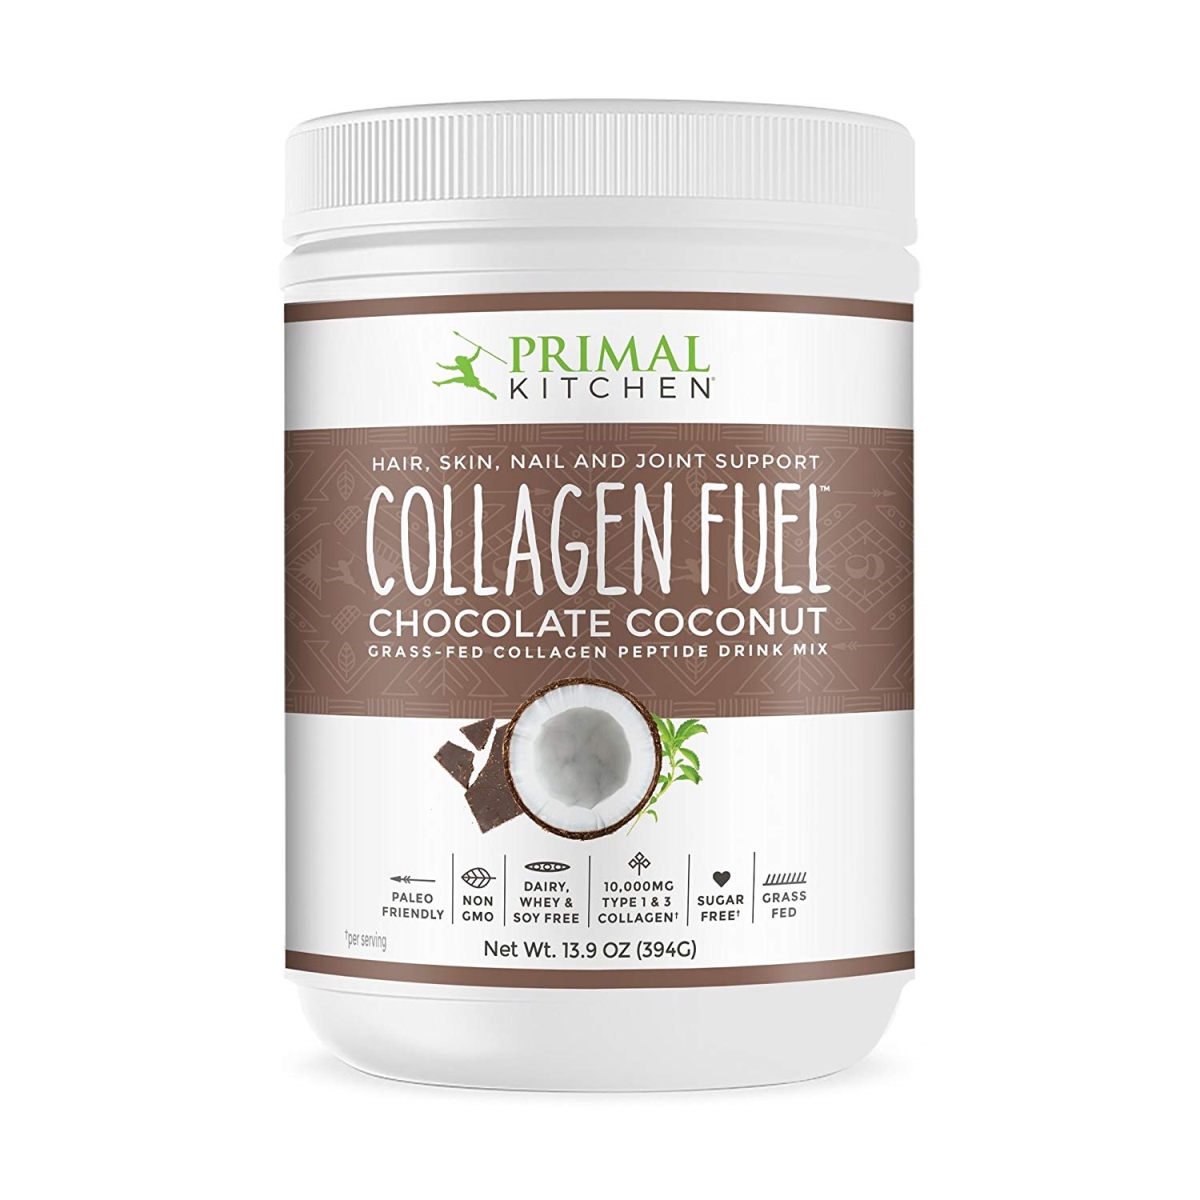 314521 Chocolate Coconut Collagen Fuel, 13.9 Oz